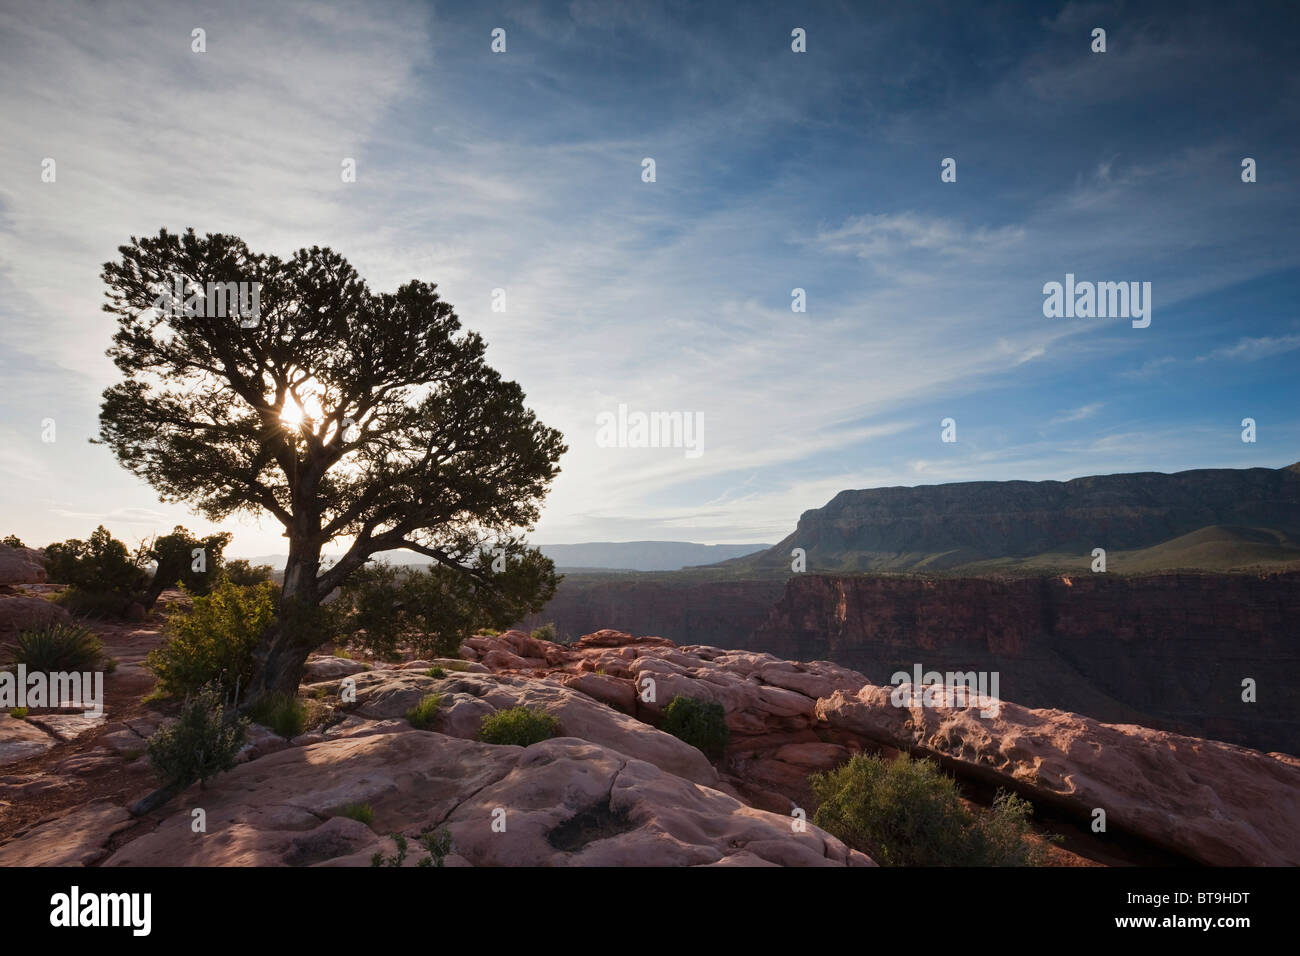 Utah-Wacholder (Juniperus Osteosperma) bei Toroweap Point, Tuweep Area, Grand Canyon, North Rim, Arizona, USA Stockfoto